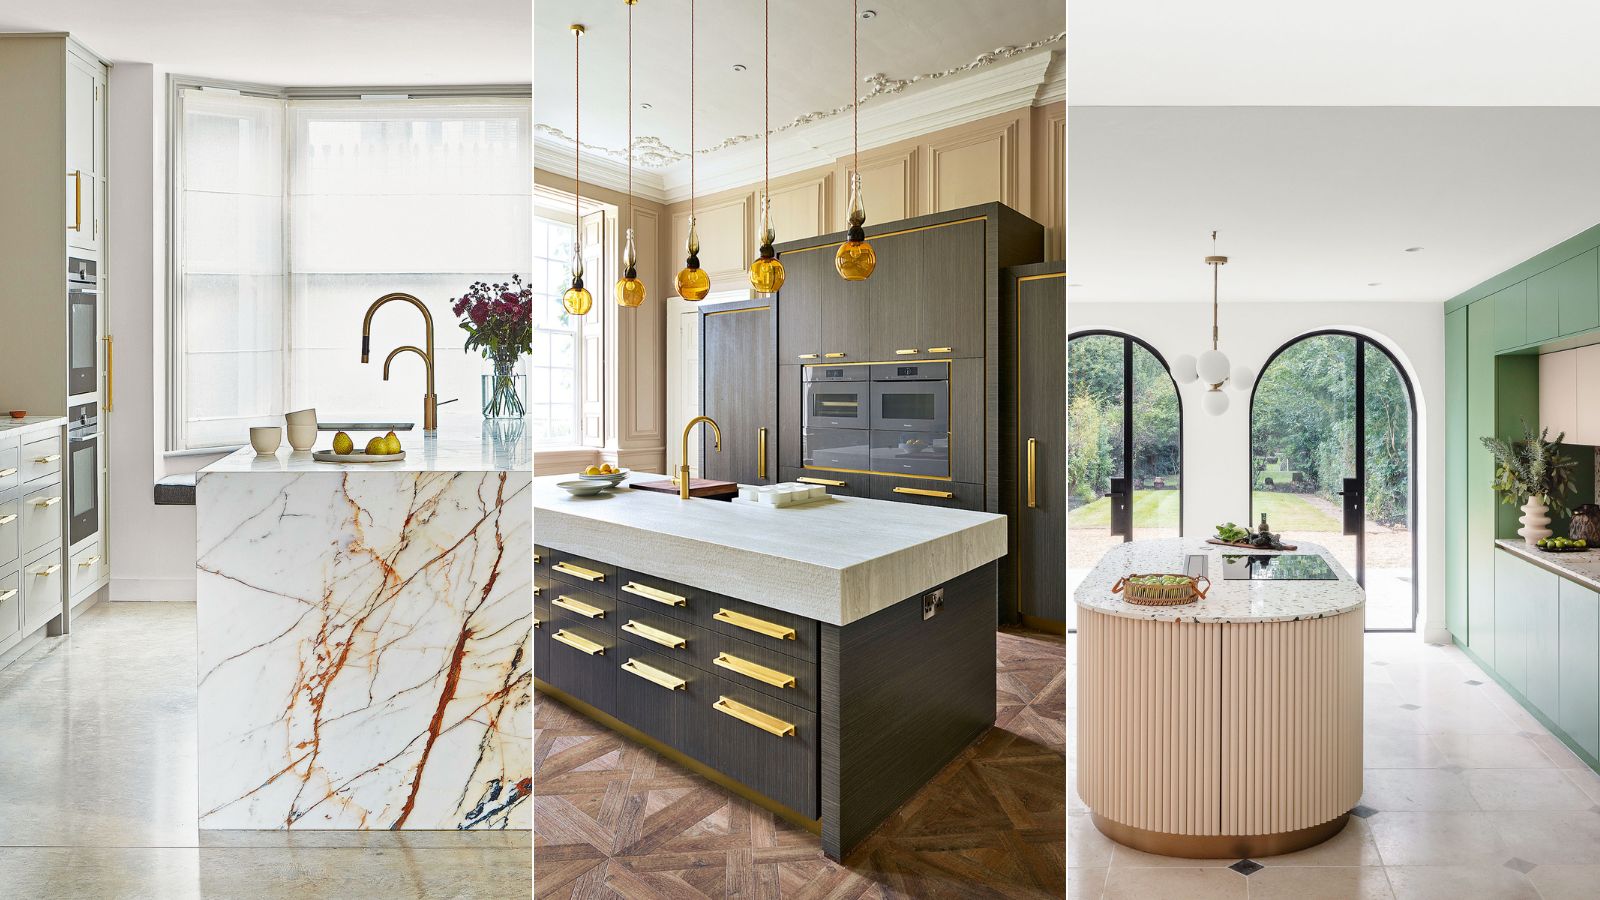 Curved kitchen island ideas: 8 beautiful designs